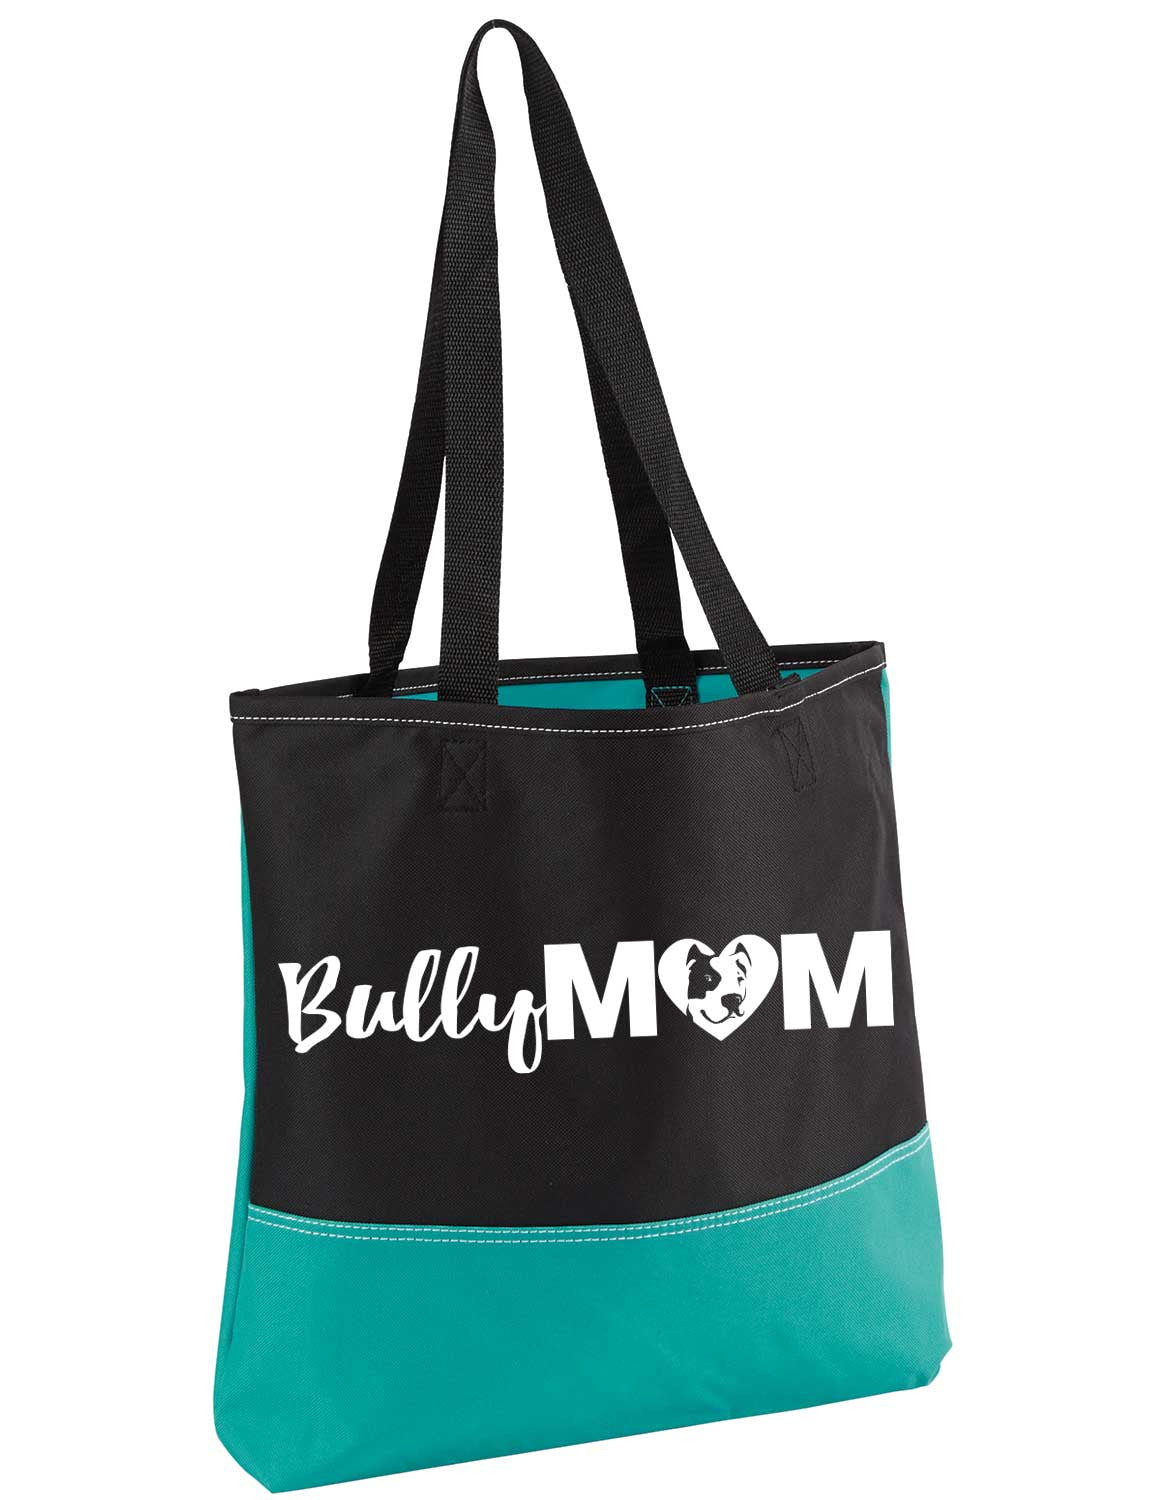 Bully Mom Tote, Bag - Pitbull Terrier - Super Fun & Cute